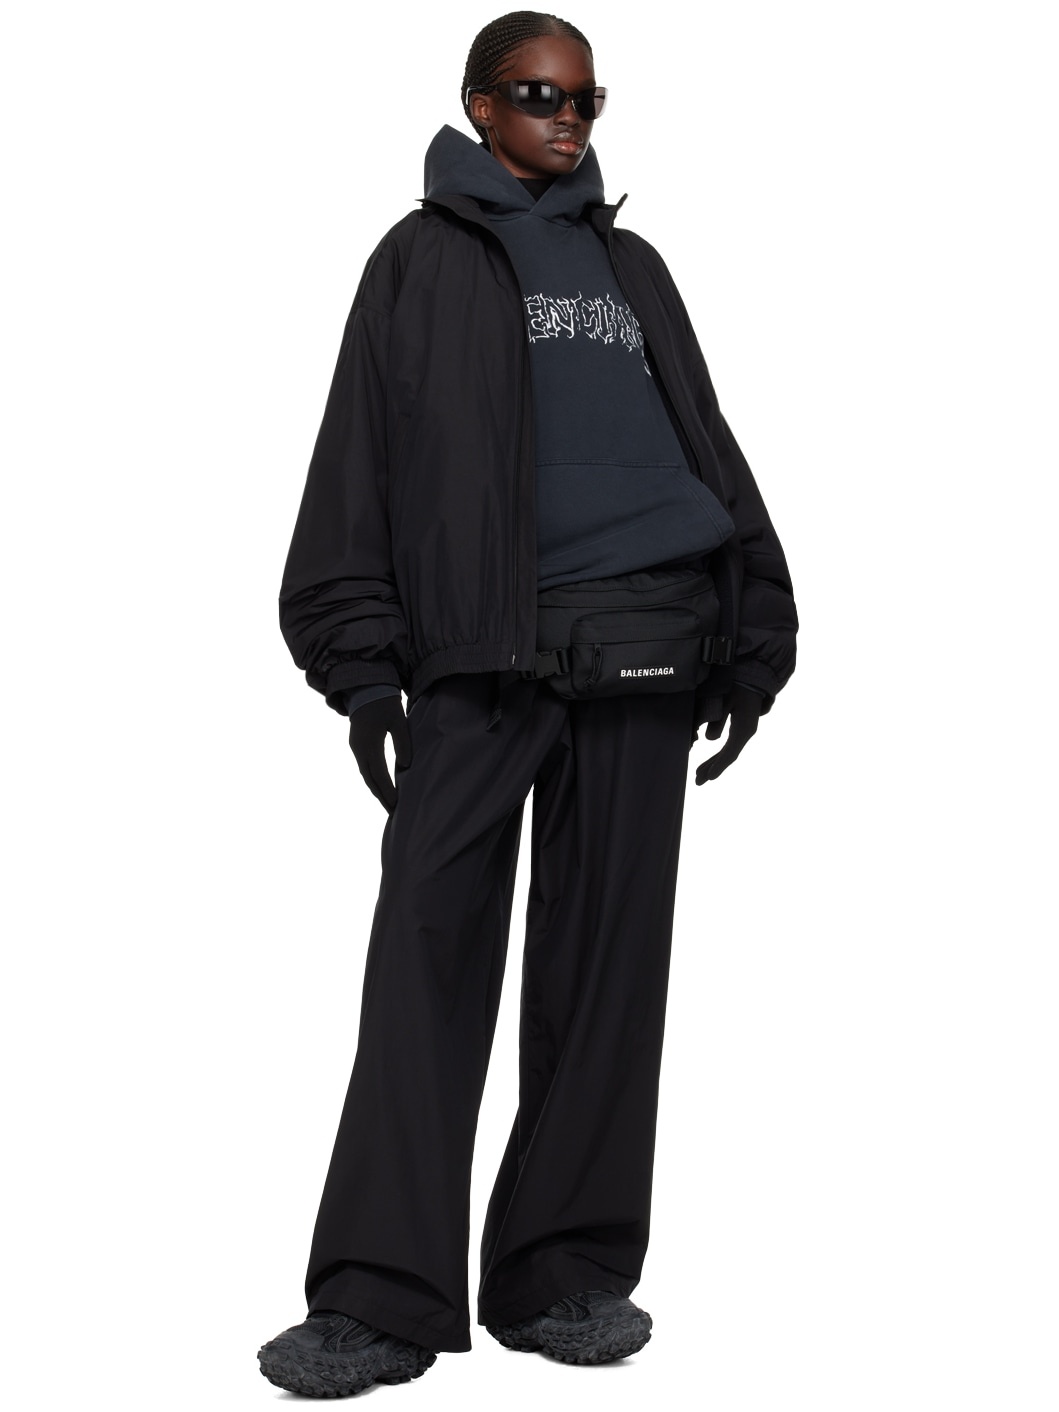 Black Skiwear Ski Belt Bag - 4